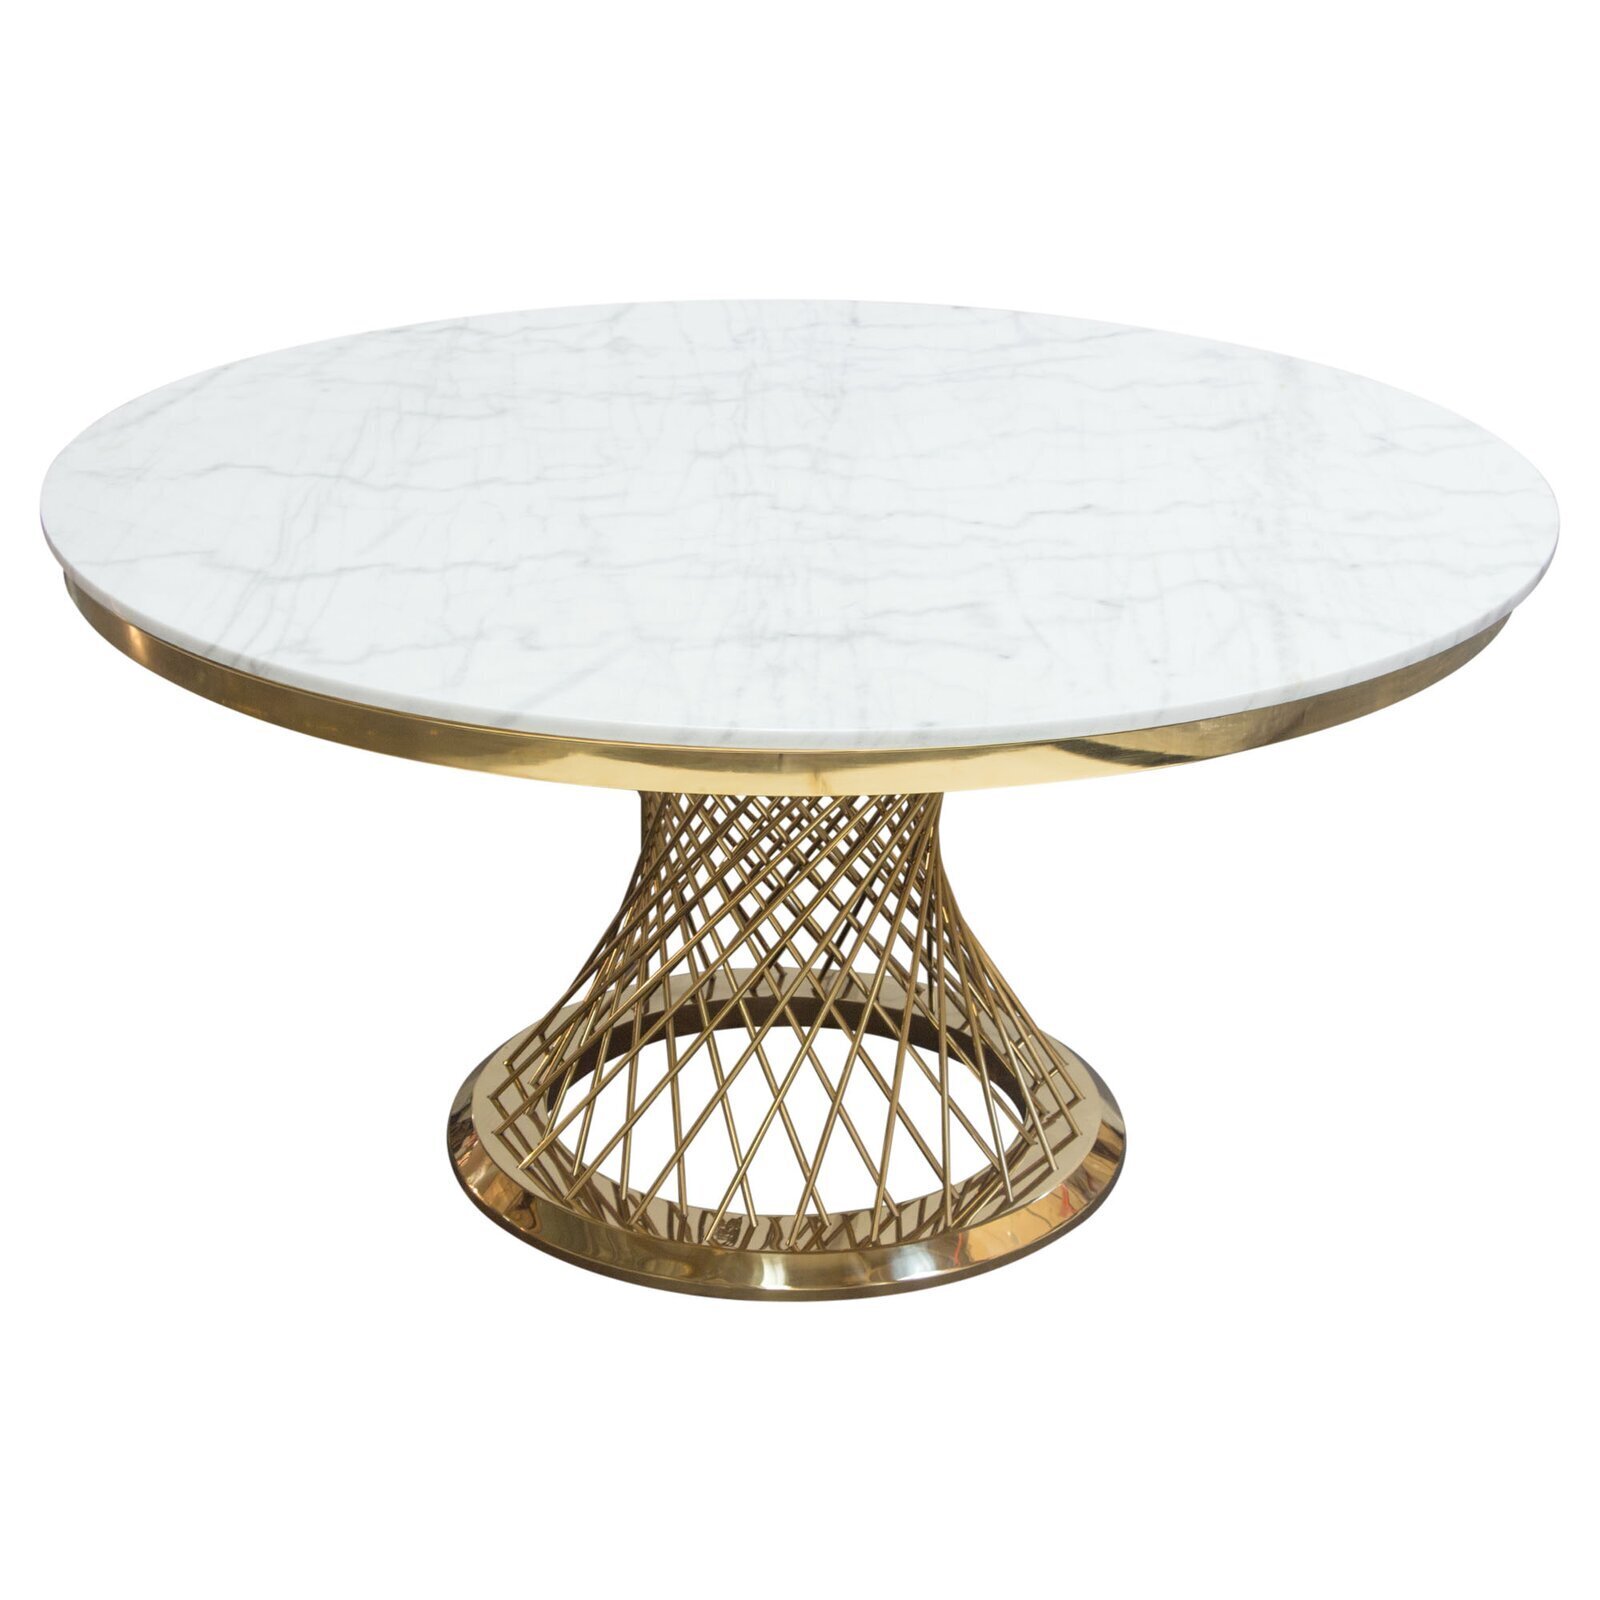 Modern Sleek White Marble Table With Gold Mesh Base 